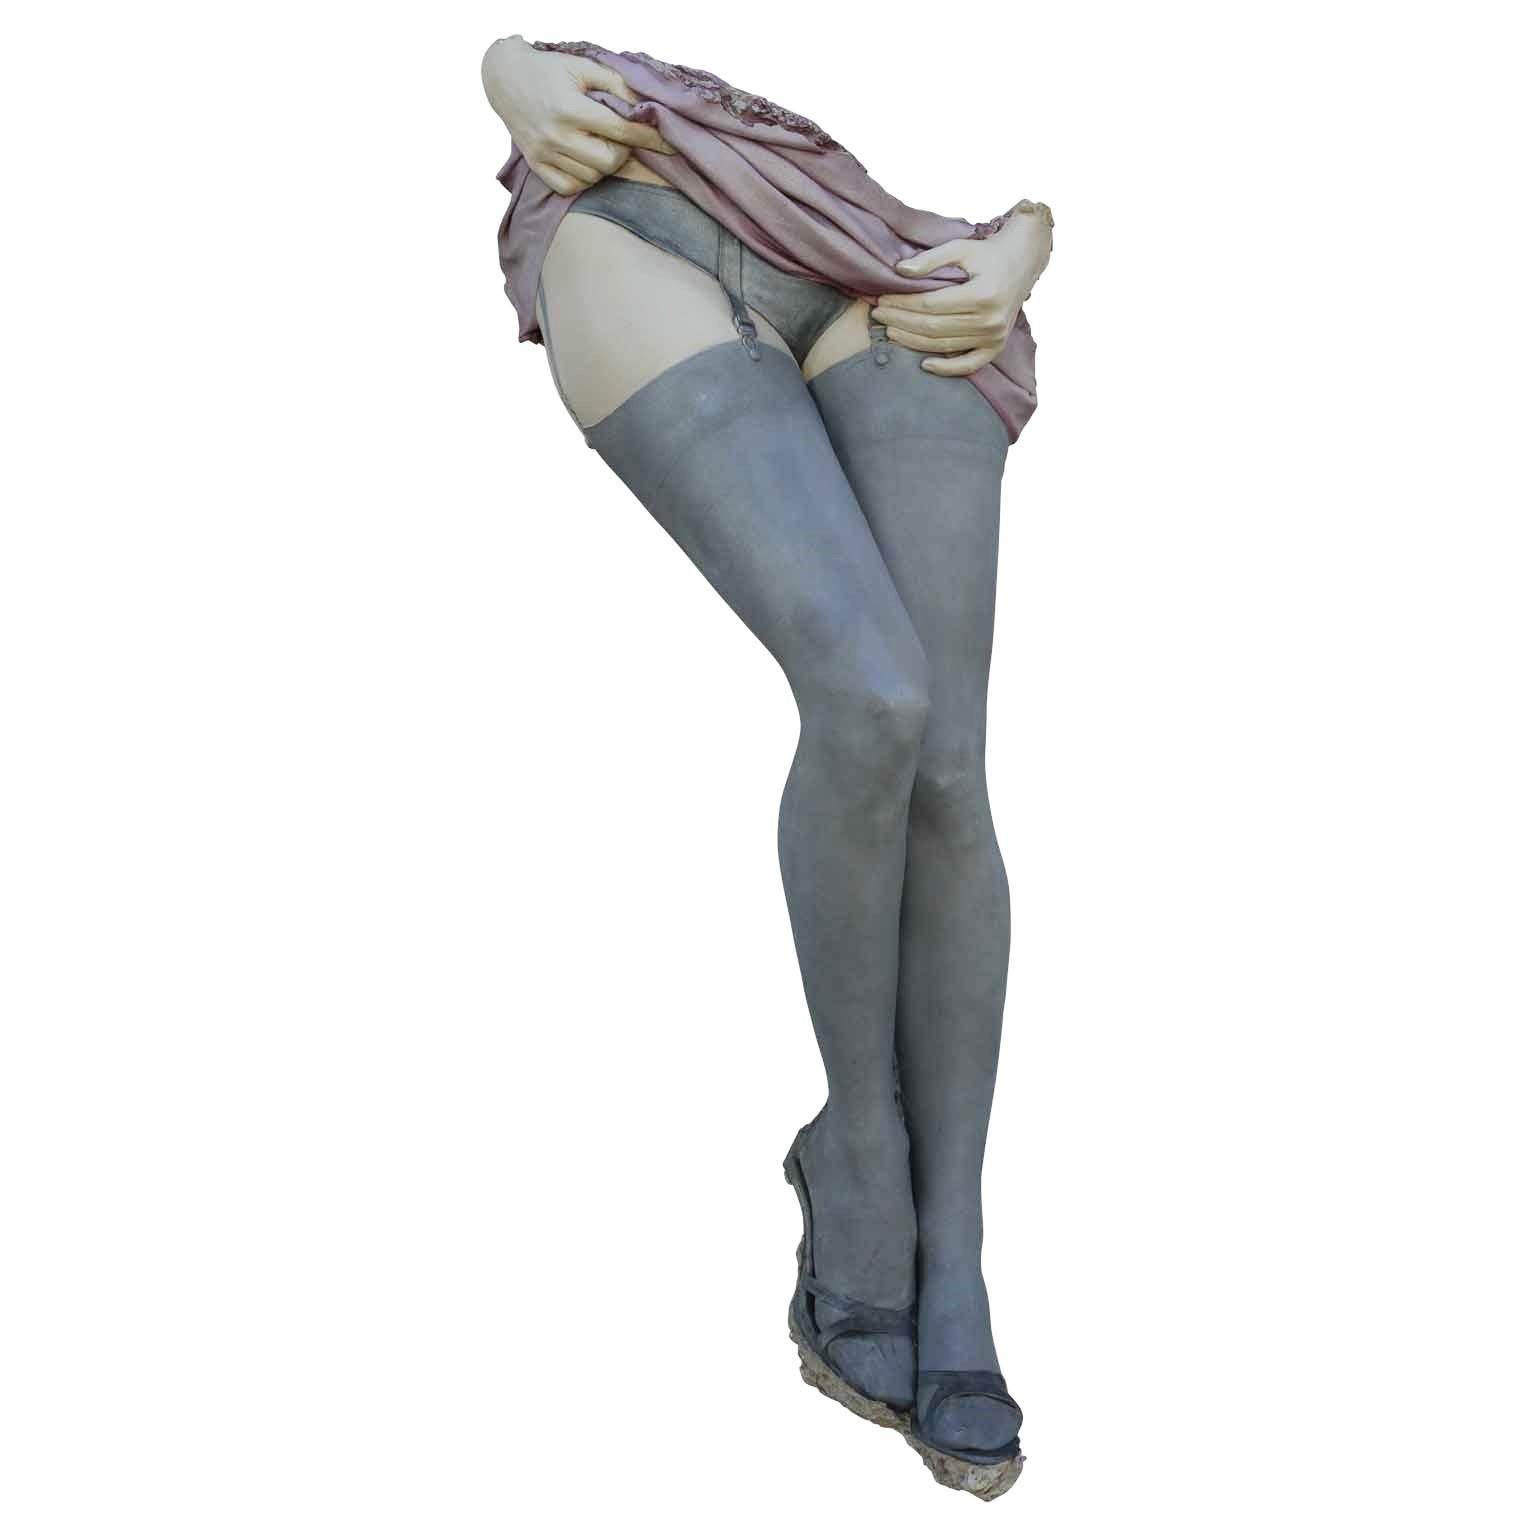 Marc Sijan Figurative Sculpture - "Dancing Legs" Hyper Realistic Plaster Wall Sculpture